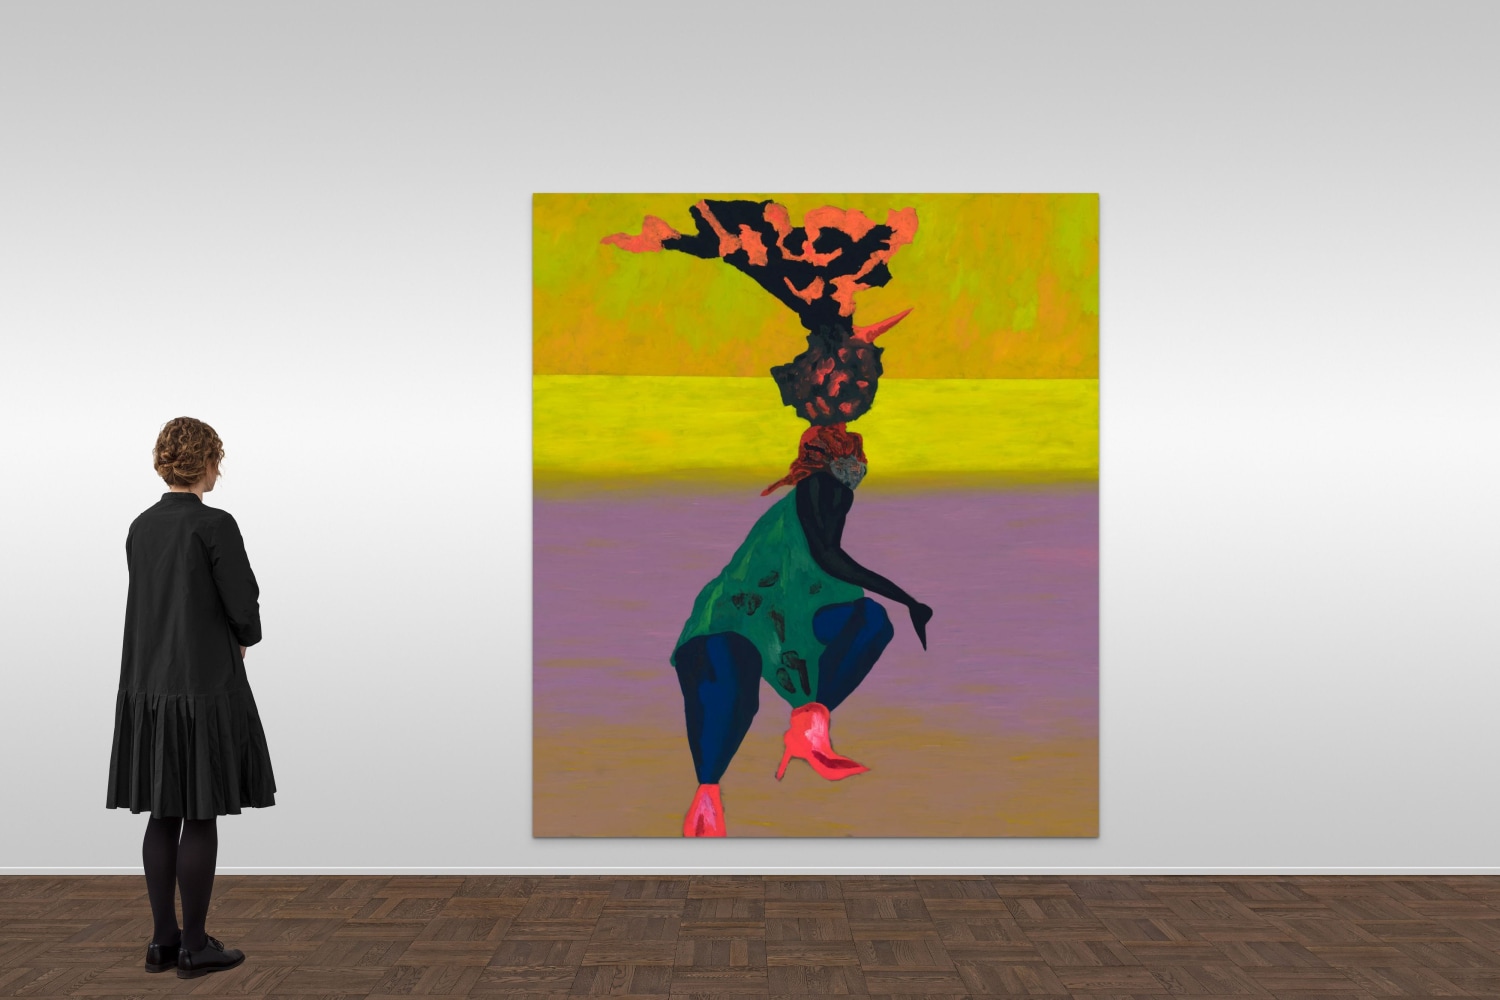 Florian Krewer
&amp;ldquo;day dream&amp;rdquo;, 2022
Oil on canvas
98 1/4 x 86 3/4 inches
249.5 x 220 cm
KRE 199